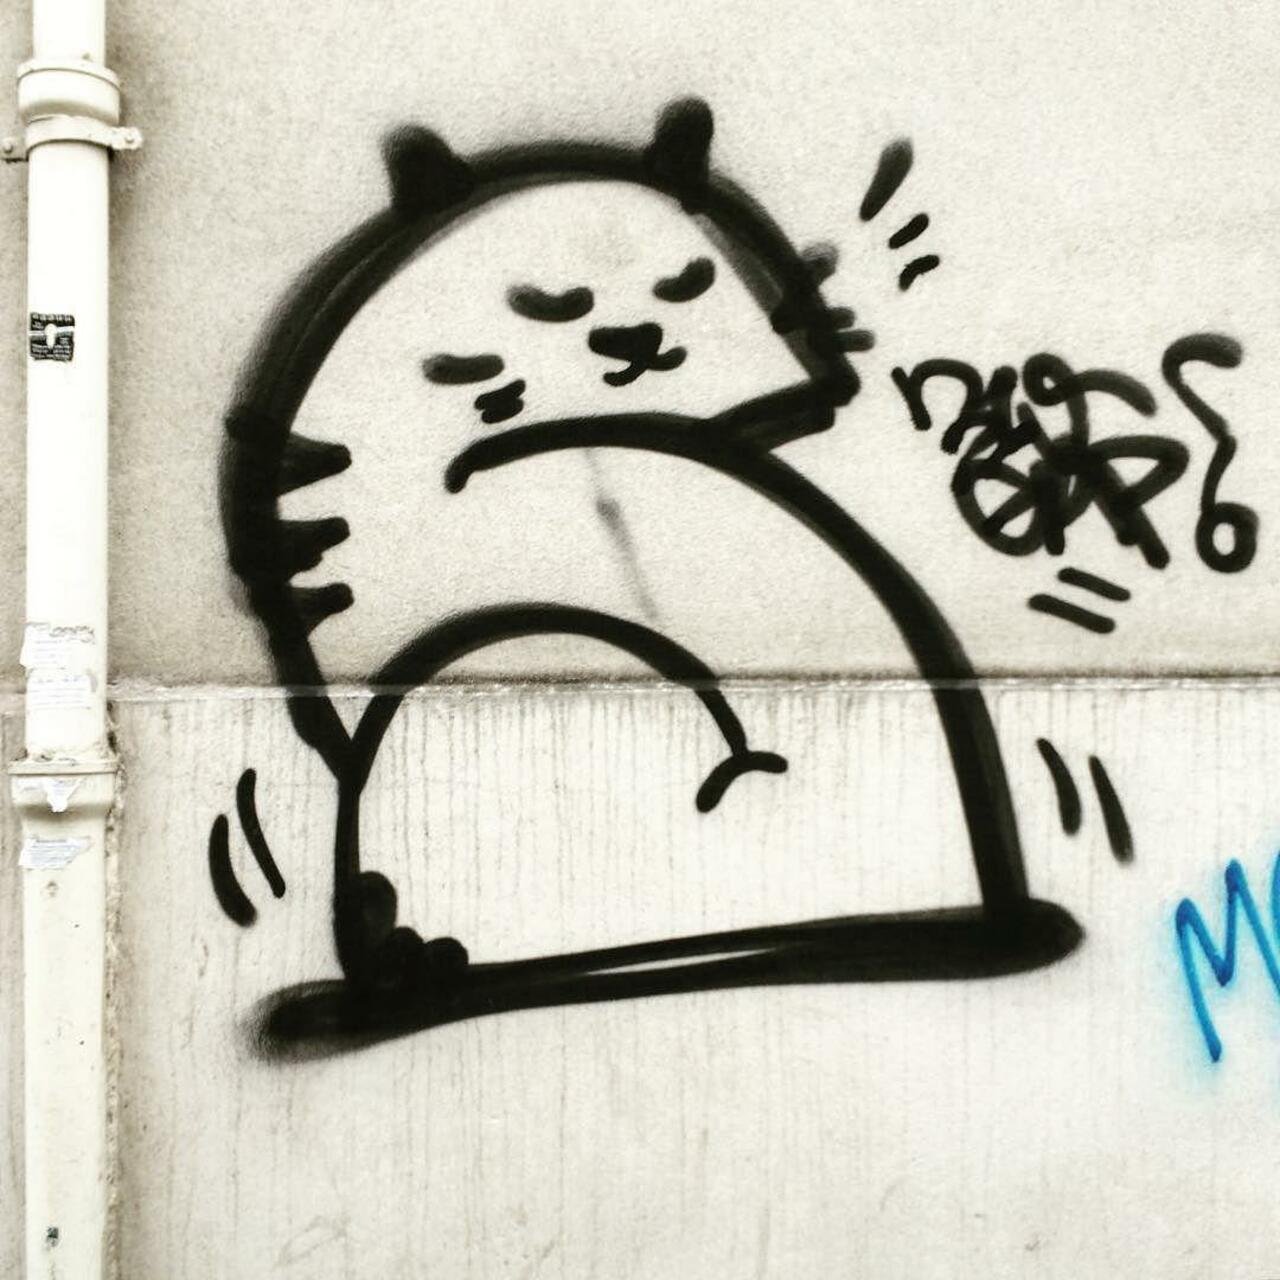 #Paris #graffiti photo by @elricoelmagnifico http://ift.tt/1KjRDCH #StreetArt https://t.co/YLGry9rMDS